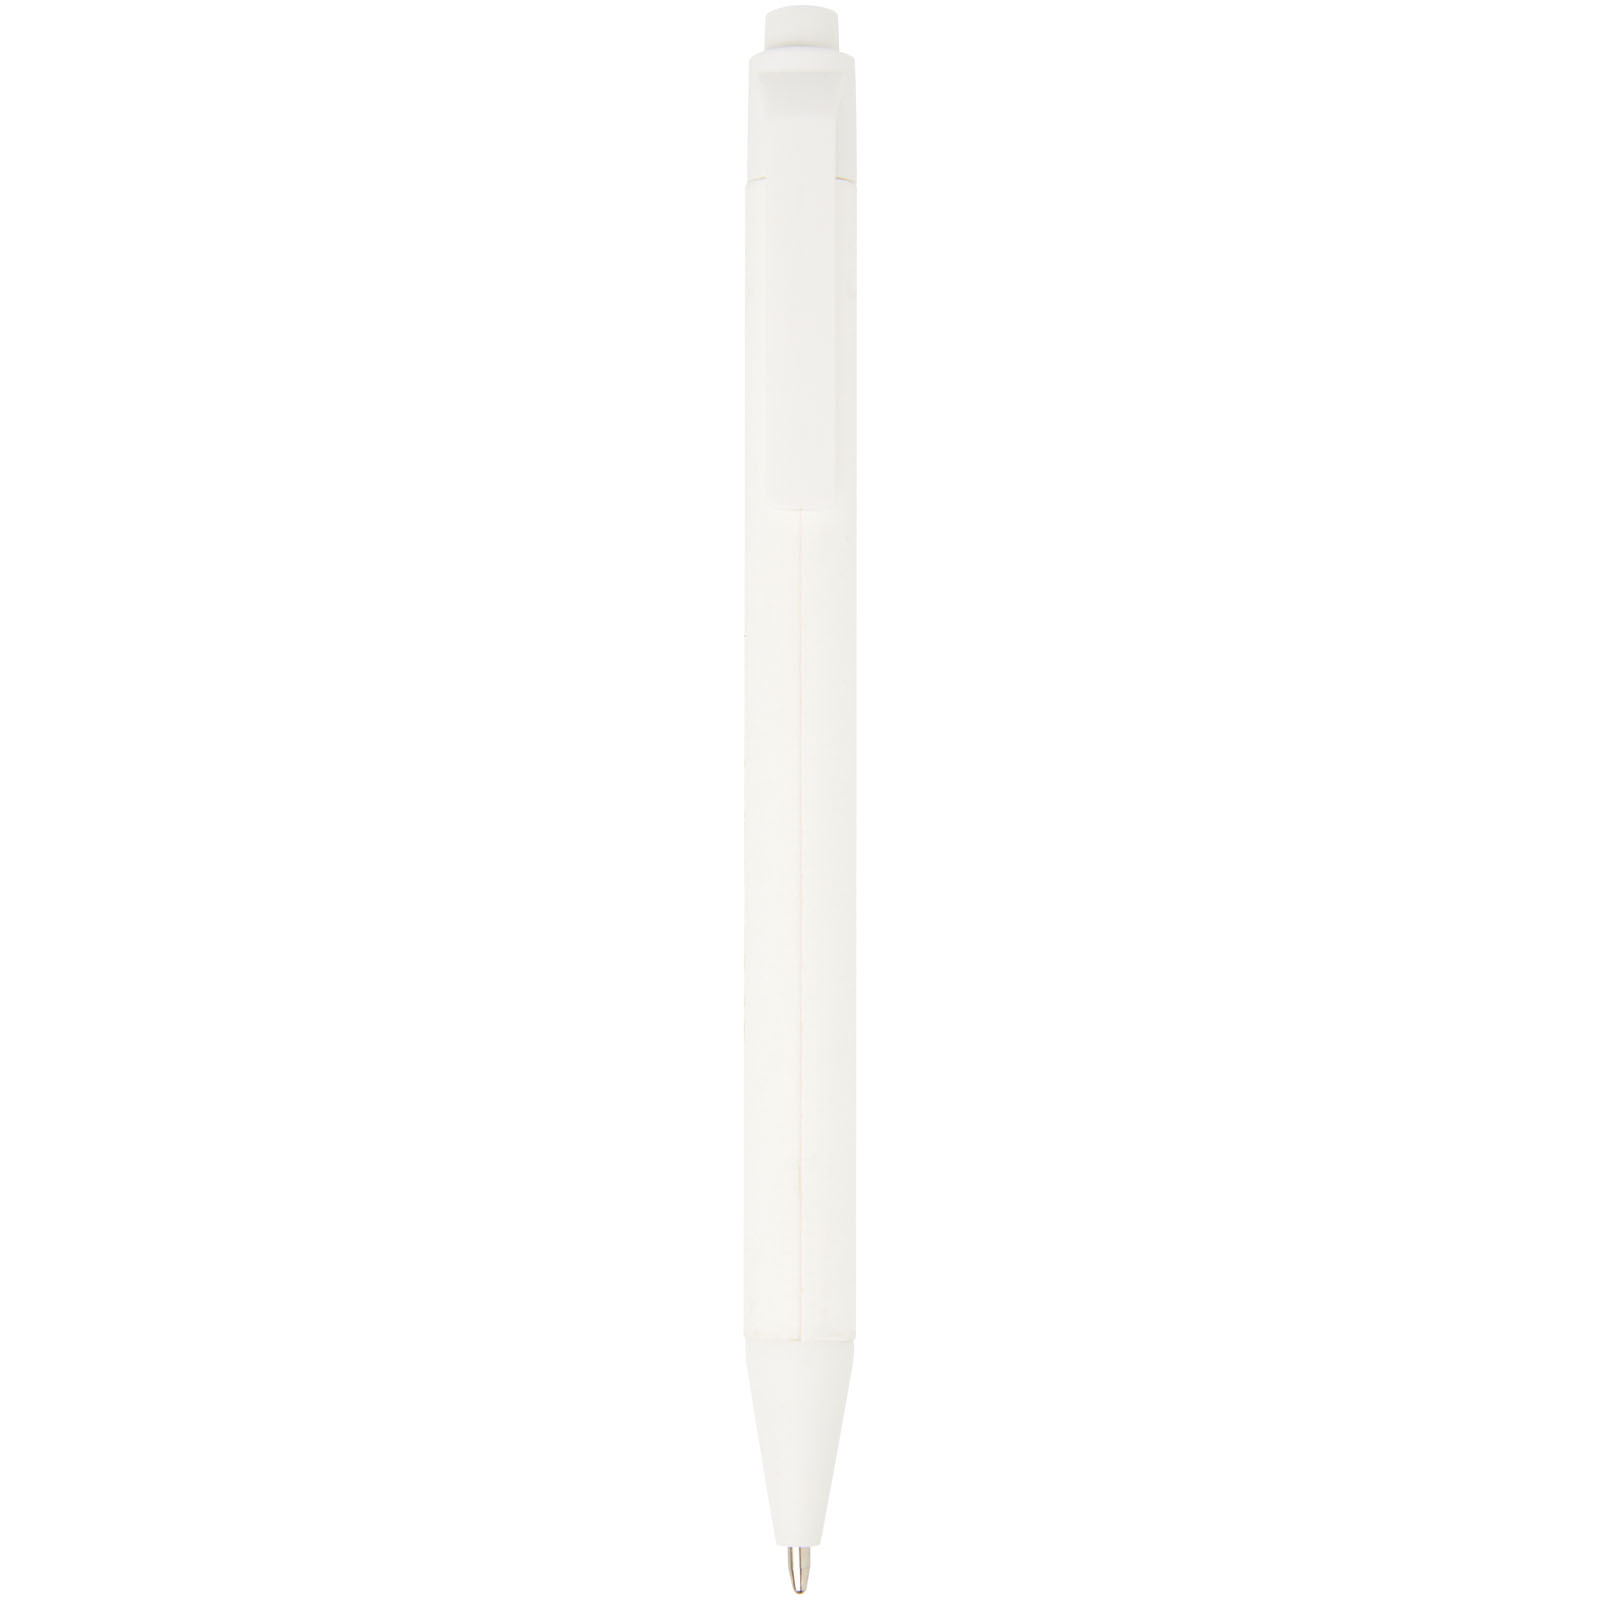 Advertising Ballpoint Pens - Chartik monochromatic recycled paper ballpoint pen with matte finish